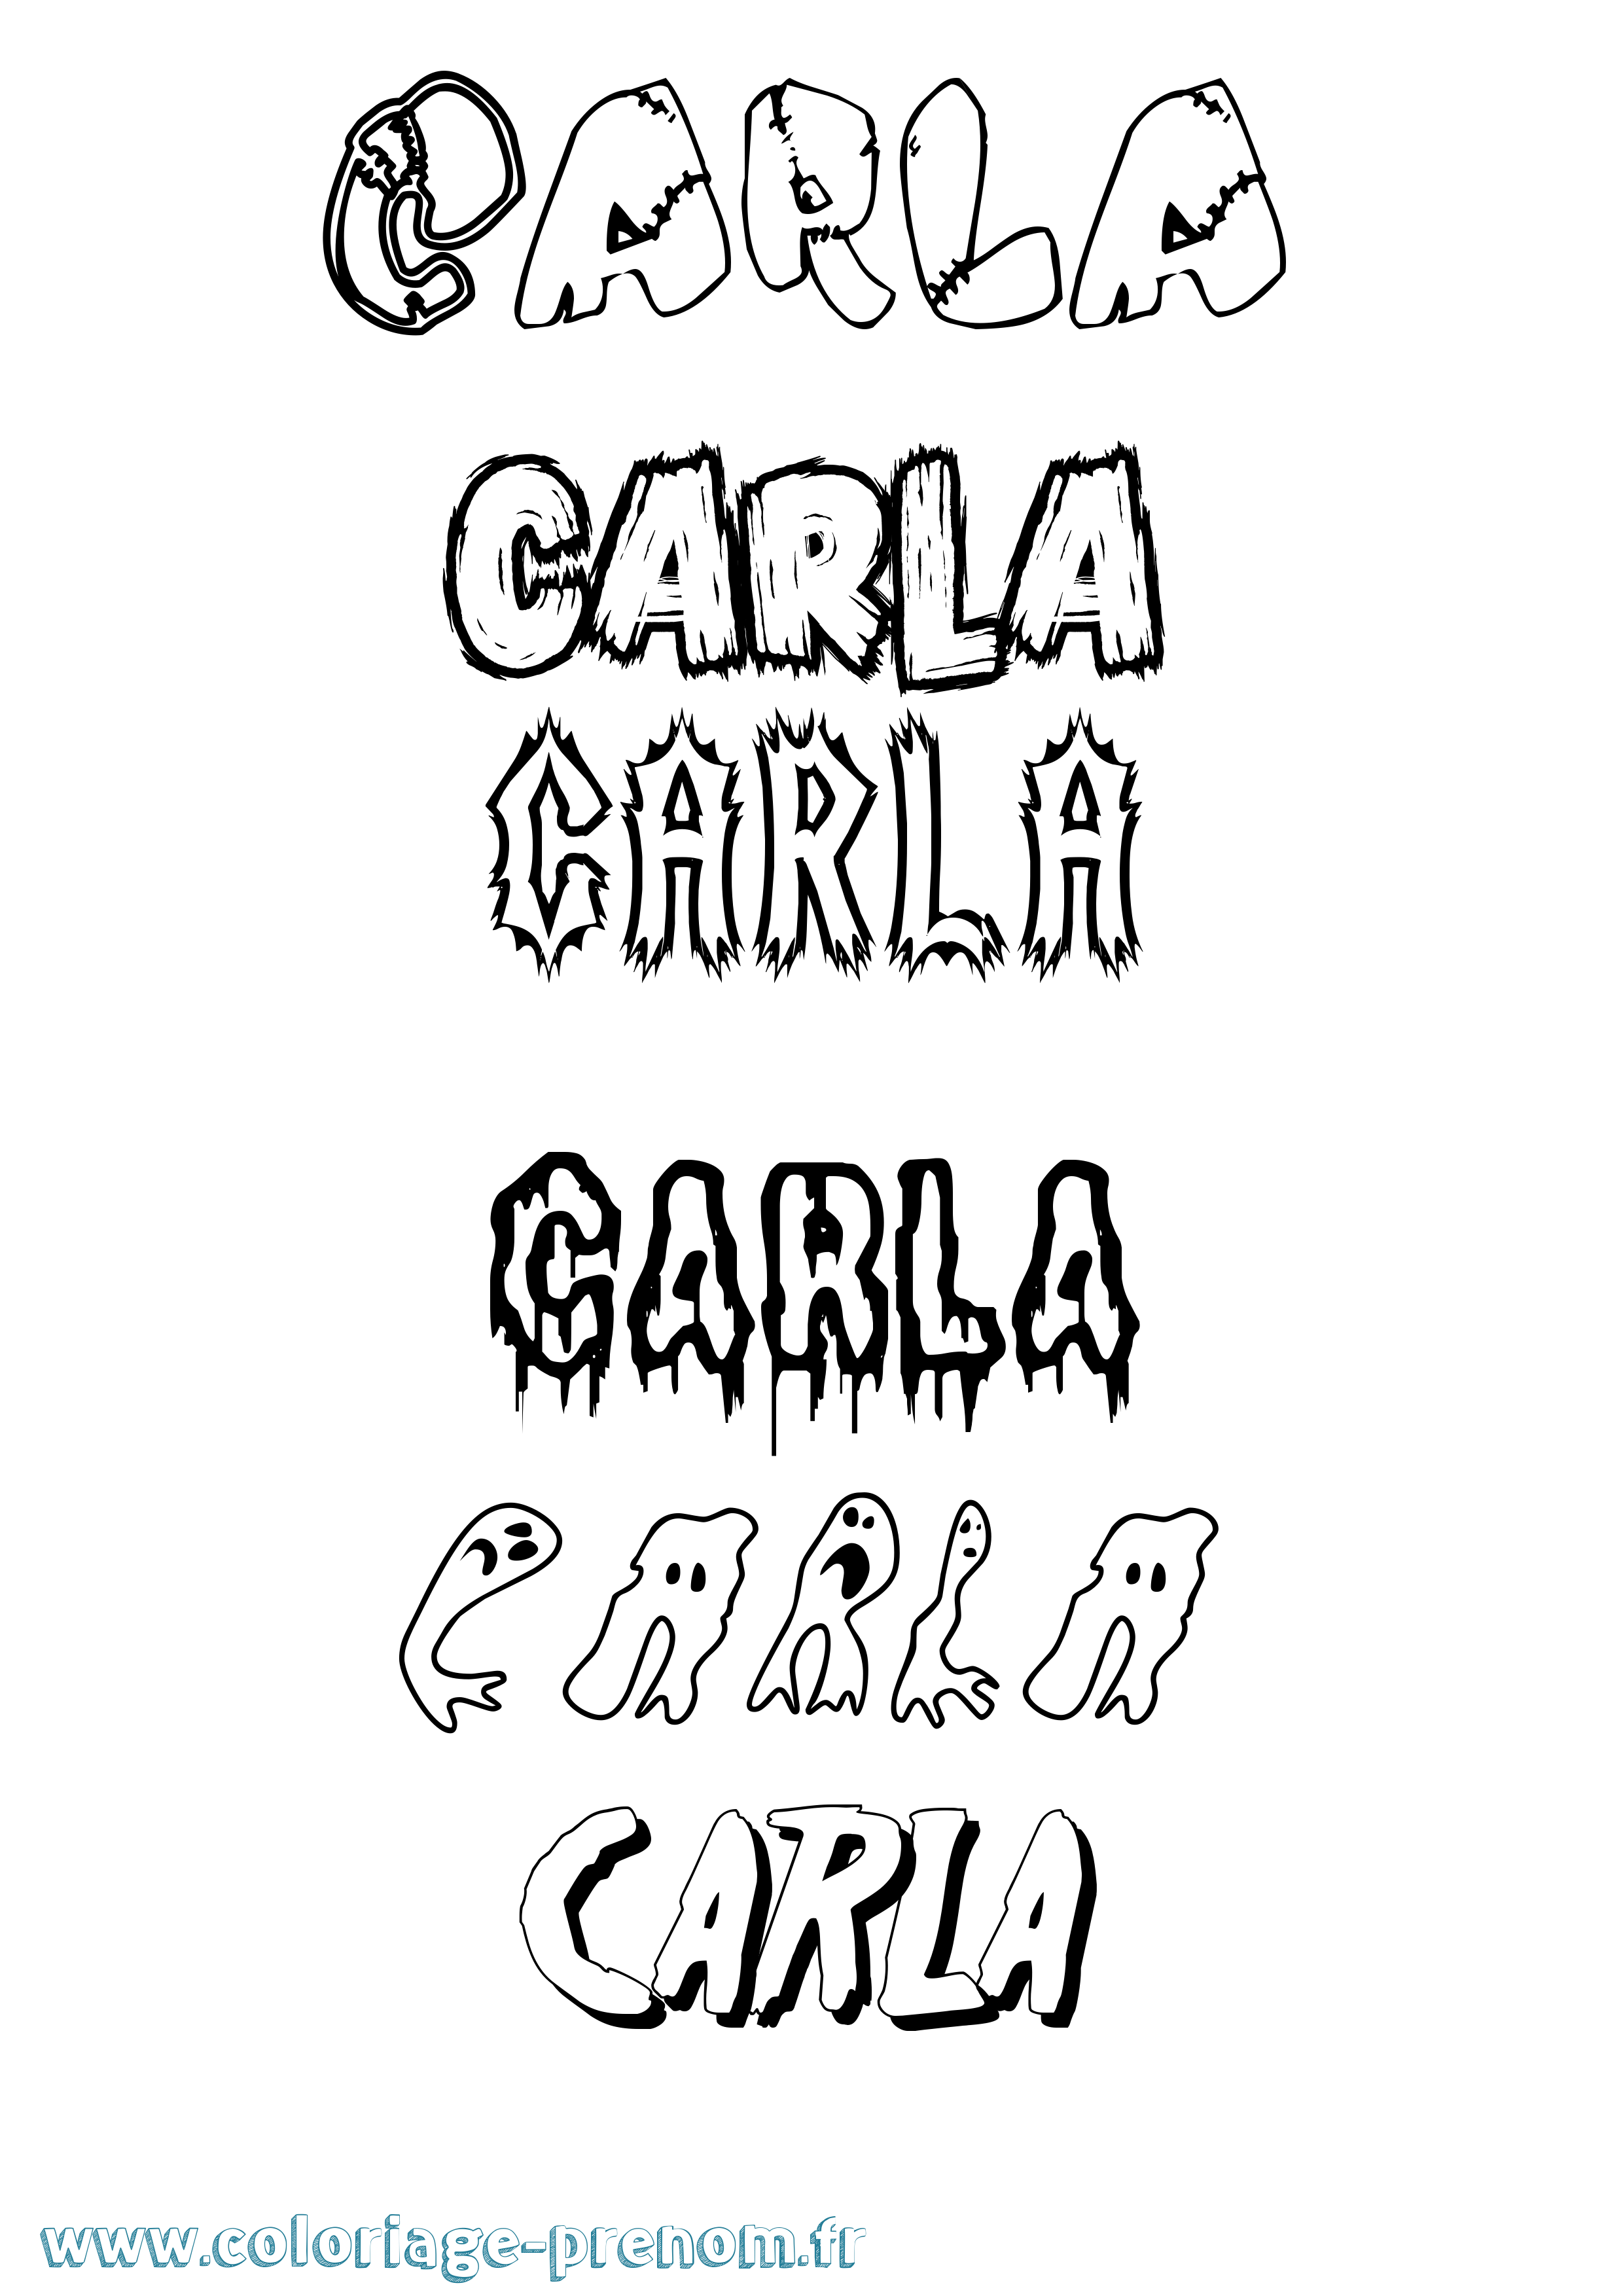 Coloriage prénom Carla